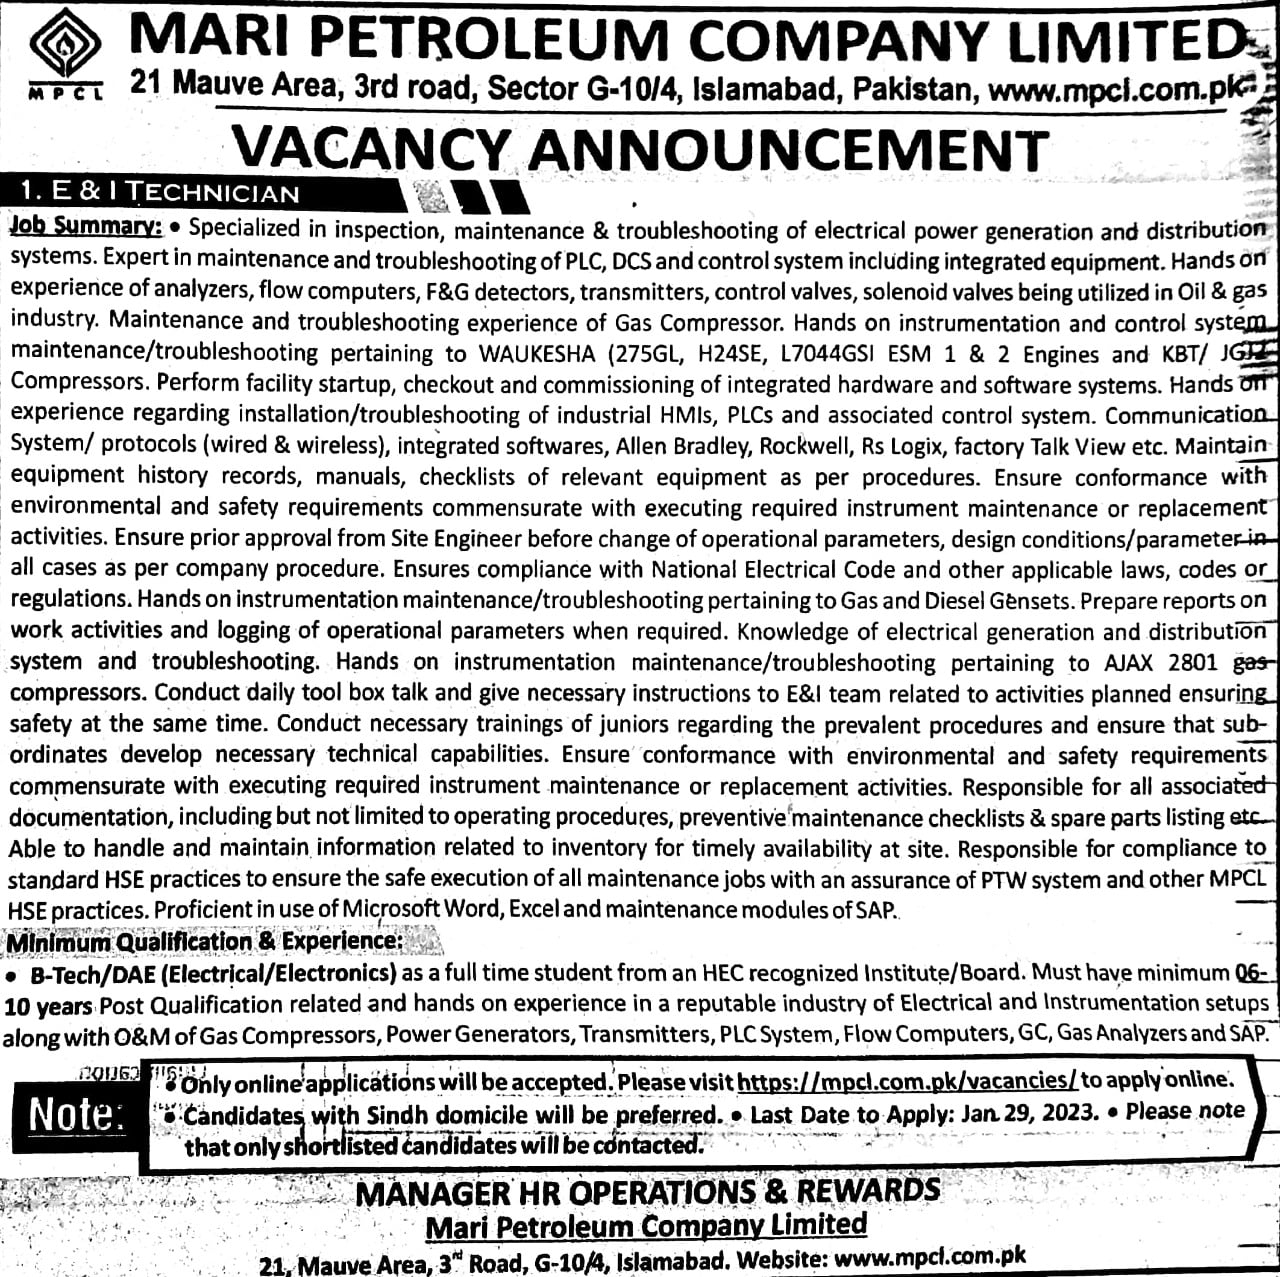 New Technician job at Mari petroleum latest 2023